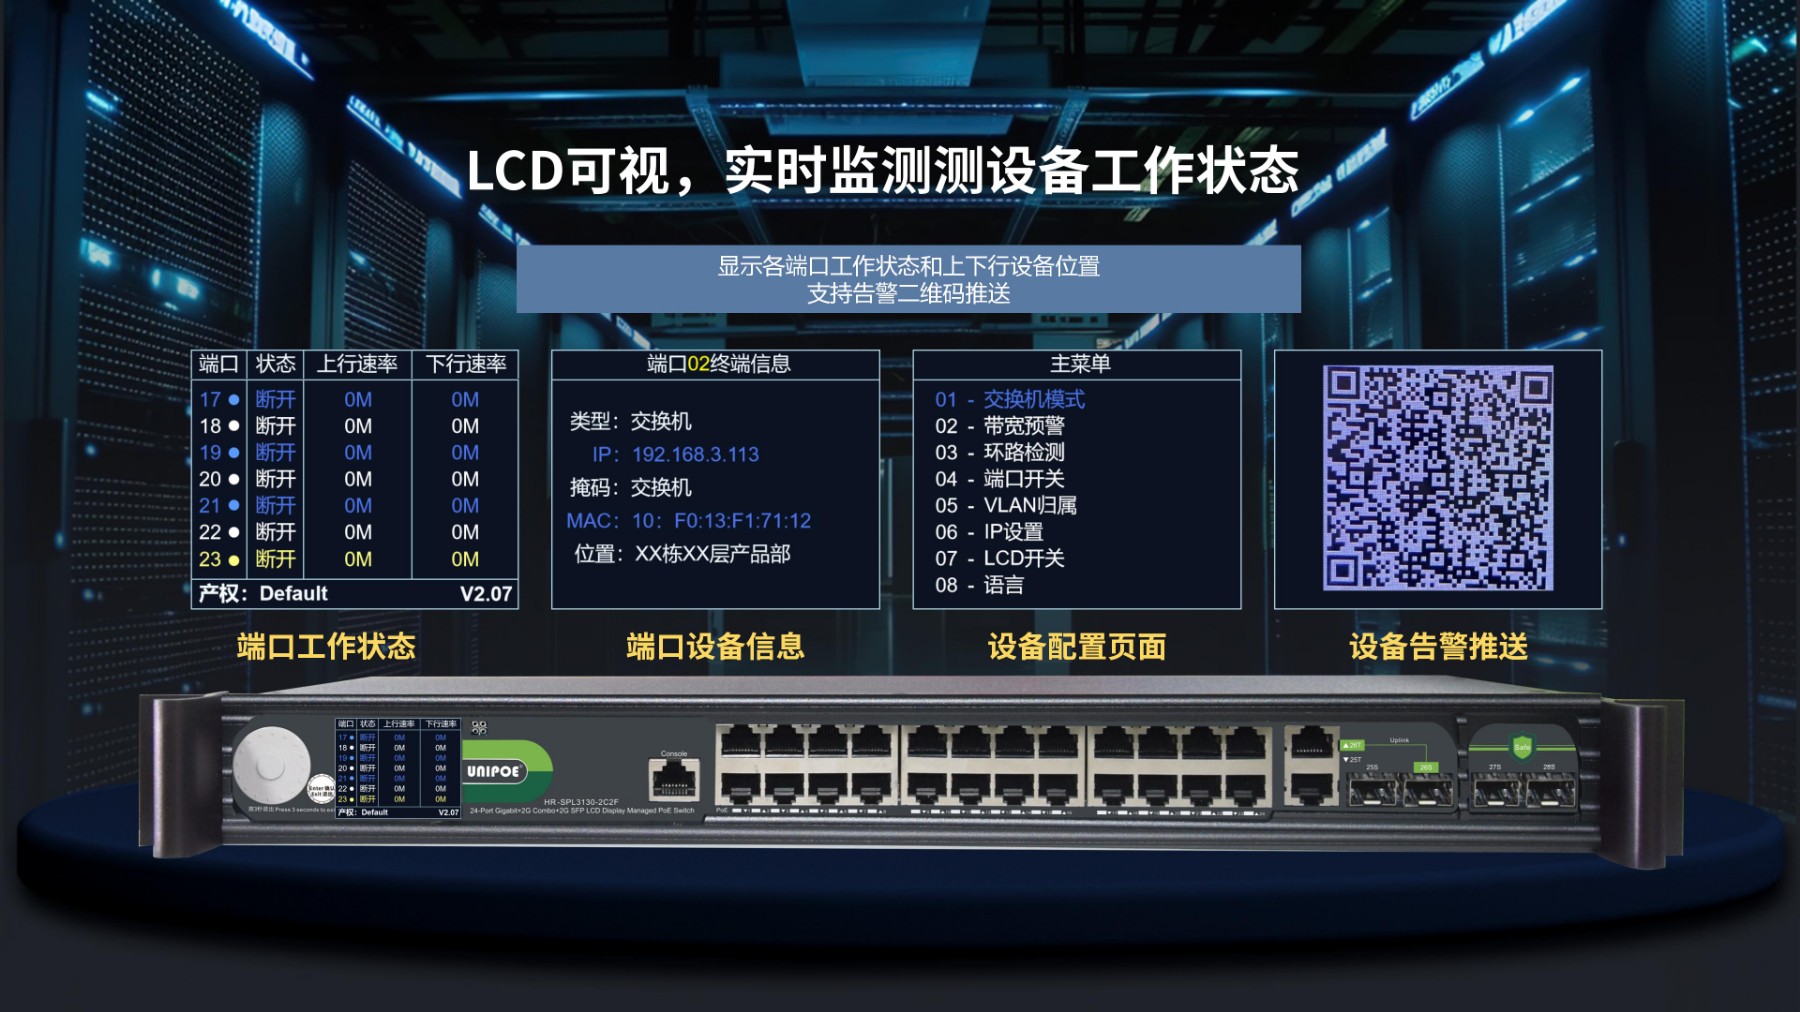 HR-SPL3130-2C2F可视交换机官网PPT_02.jpg